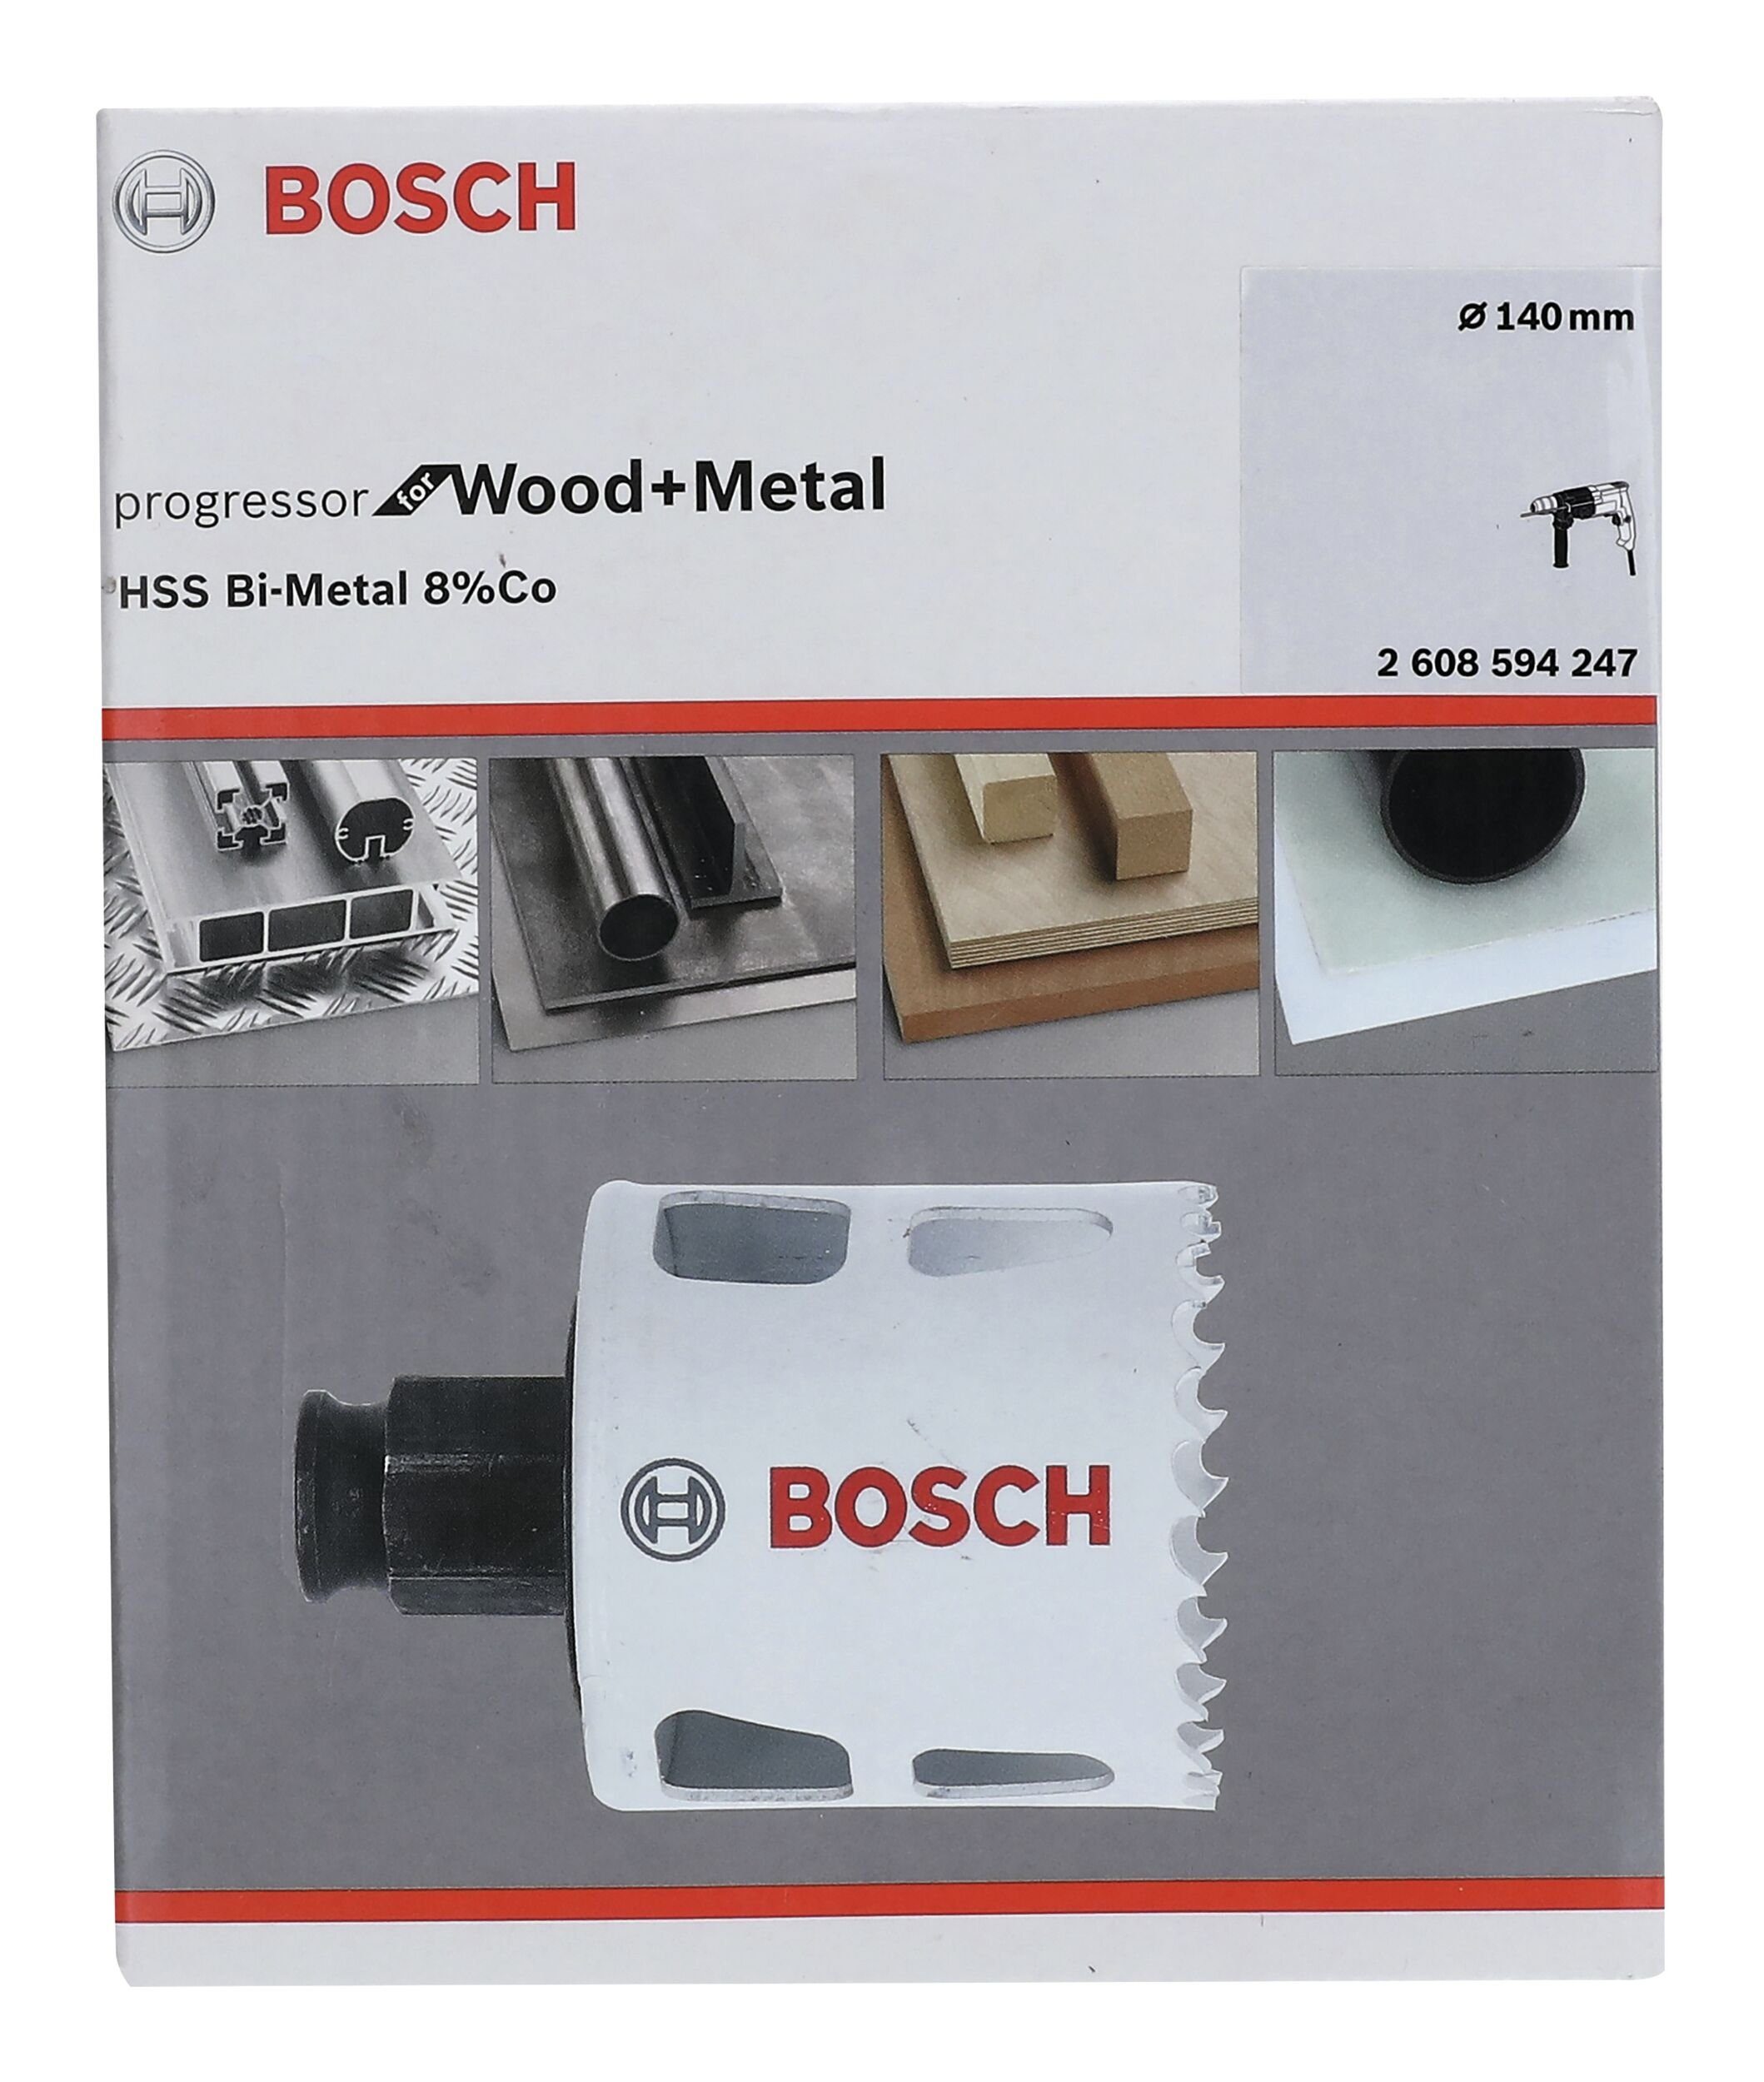 BOSCH Lochsäge, Ø mm, Progressor Wood 177 and for Metal